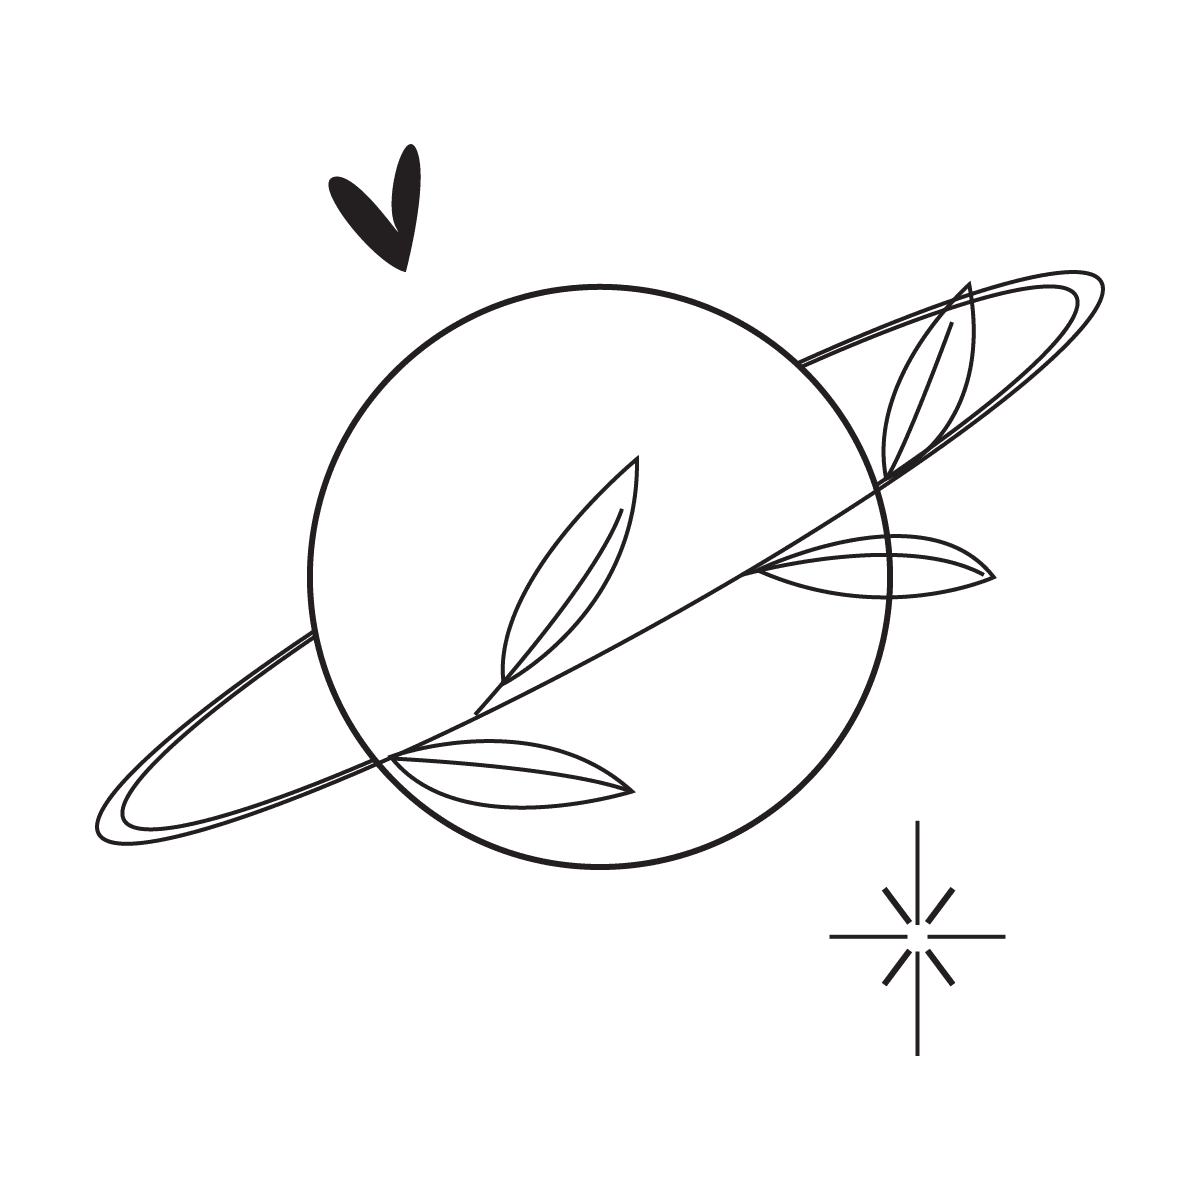 minimalist solar system tattoo in line art style